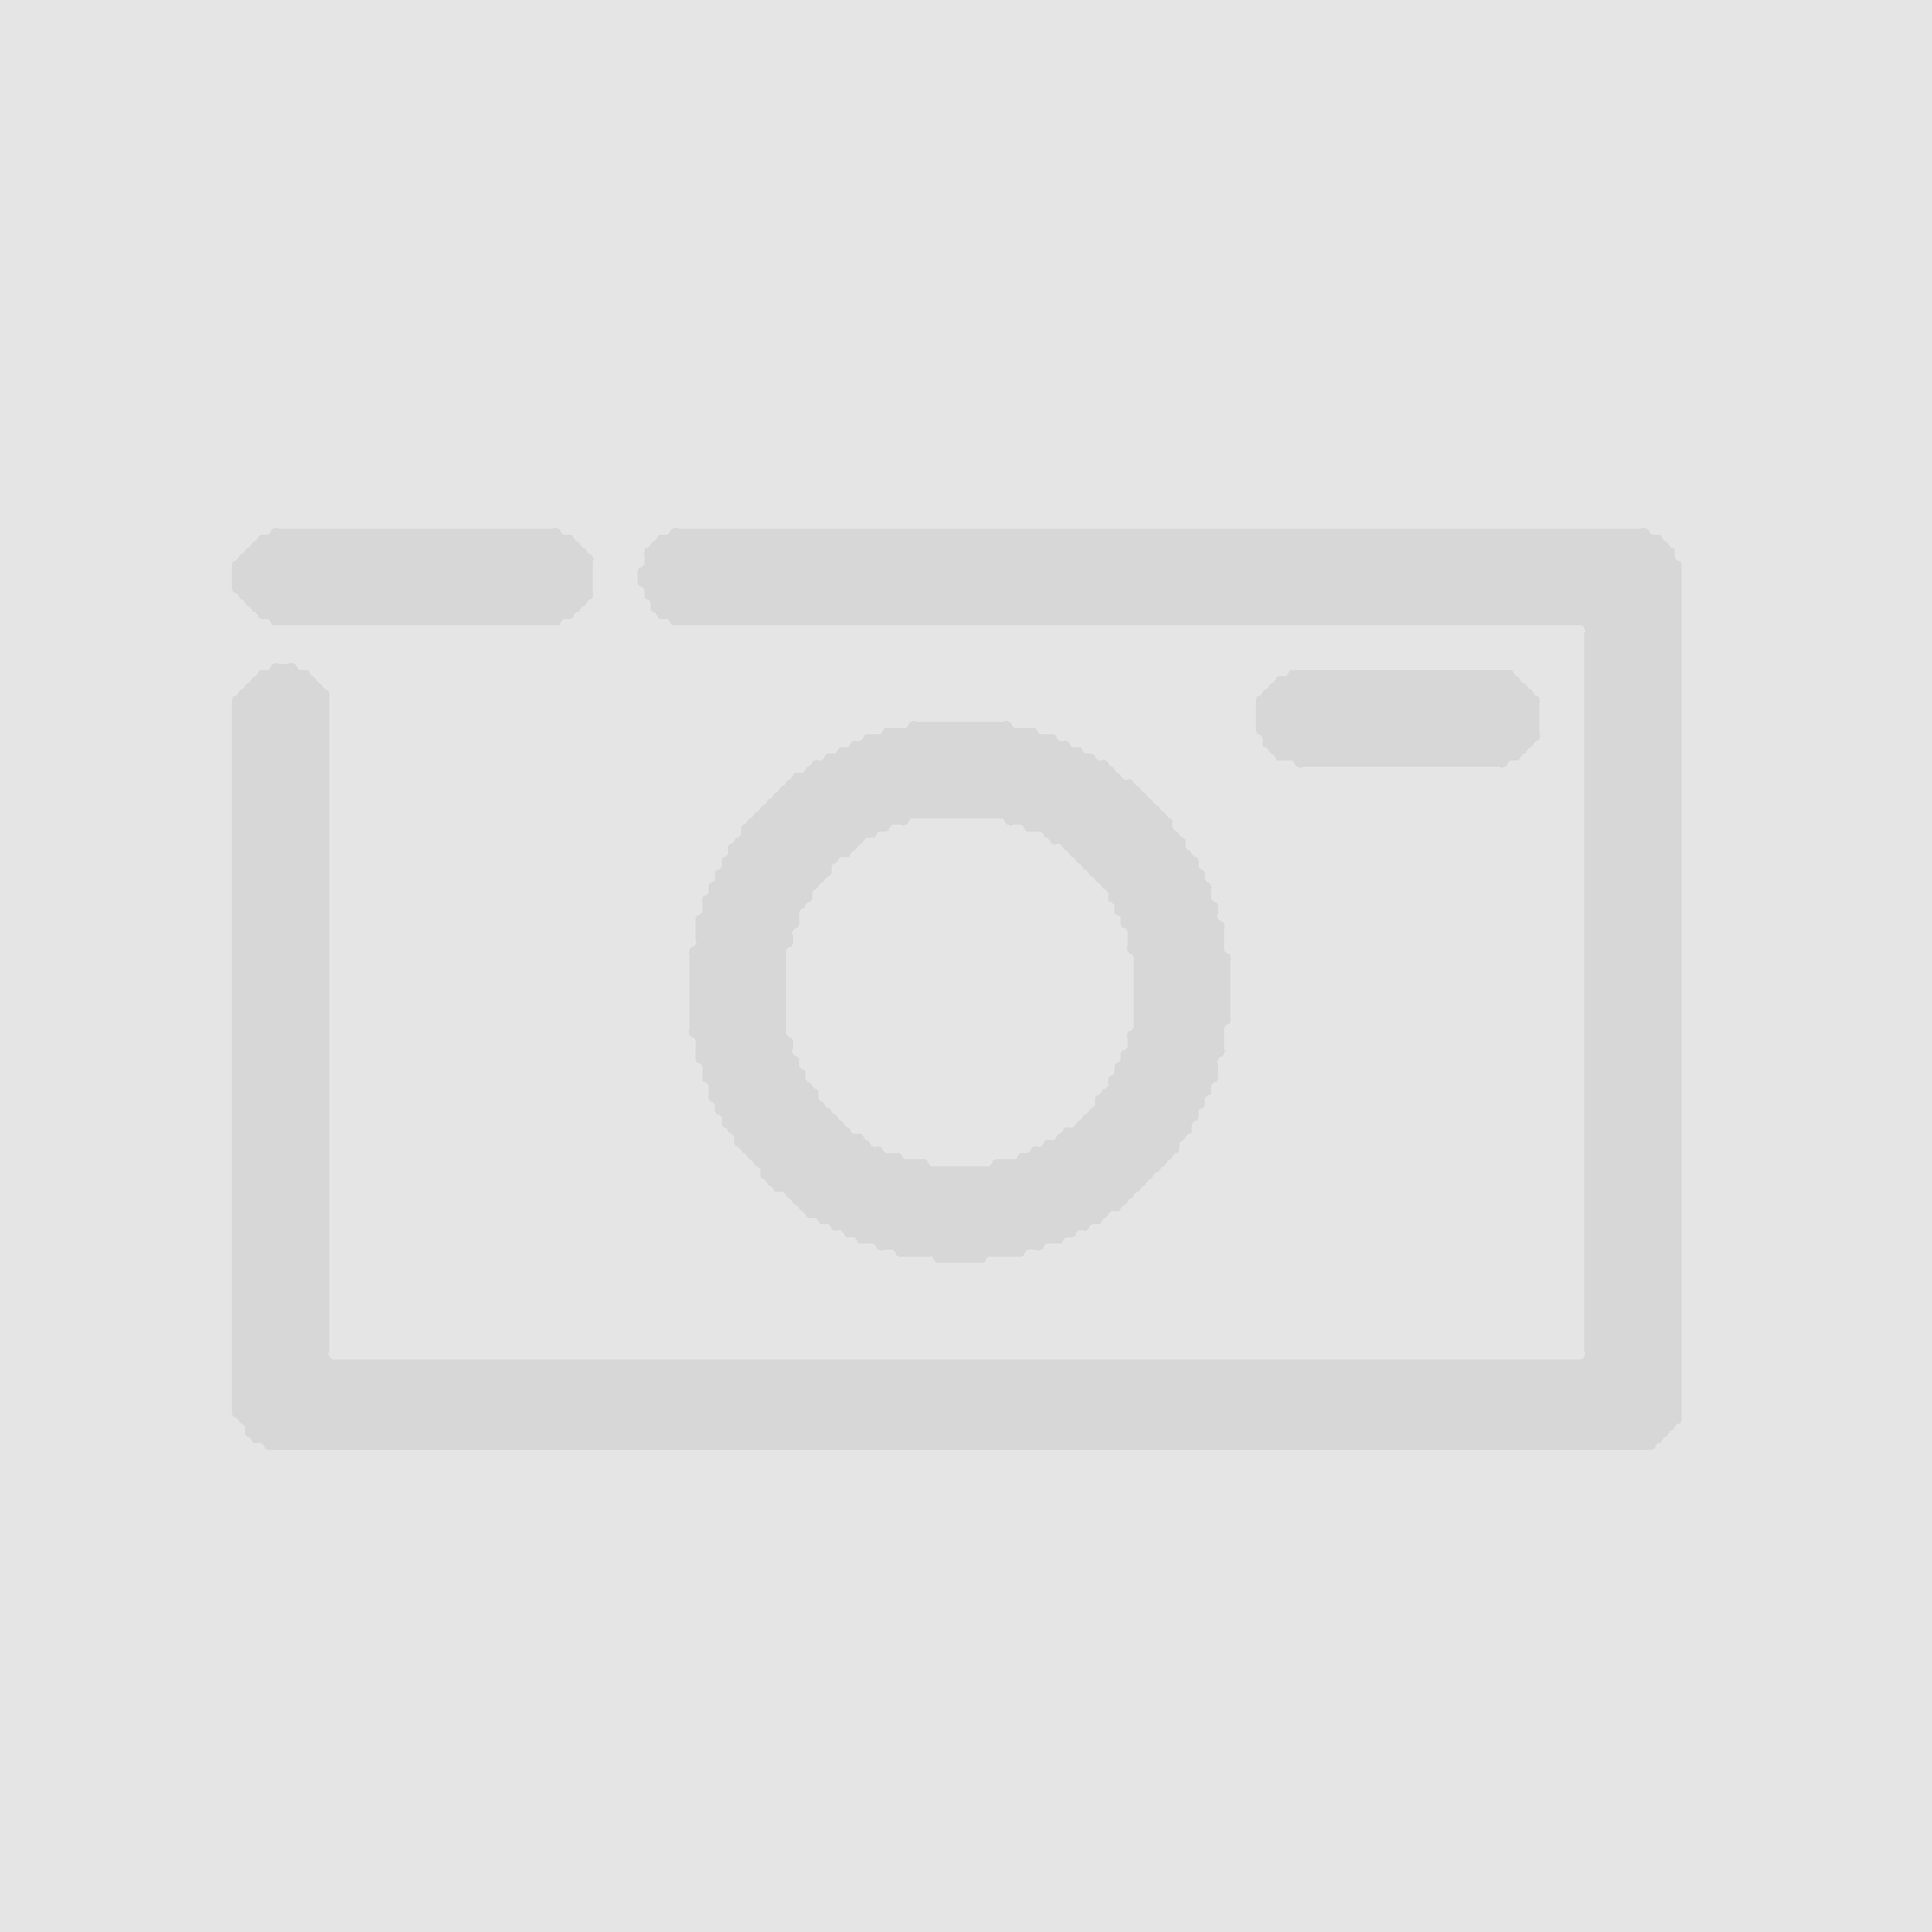 STEAMBOW FENRIS Bodkin Tips - Schraubspitze - 3er Pack